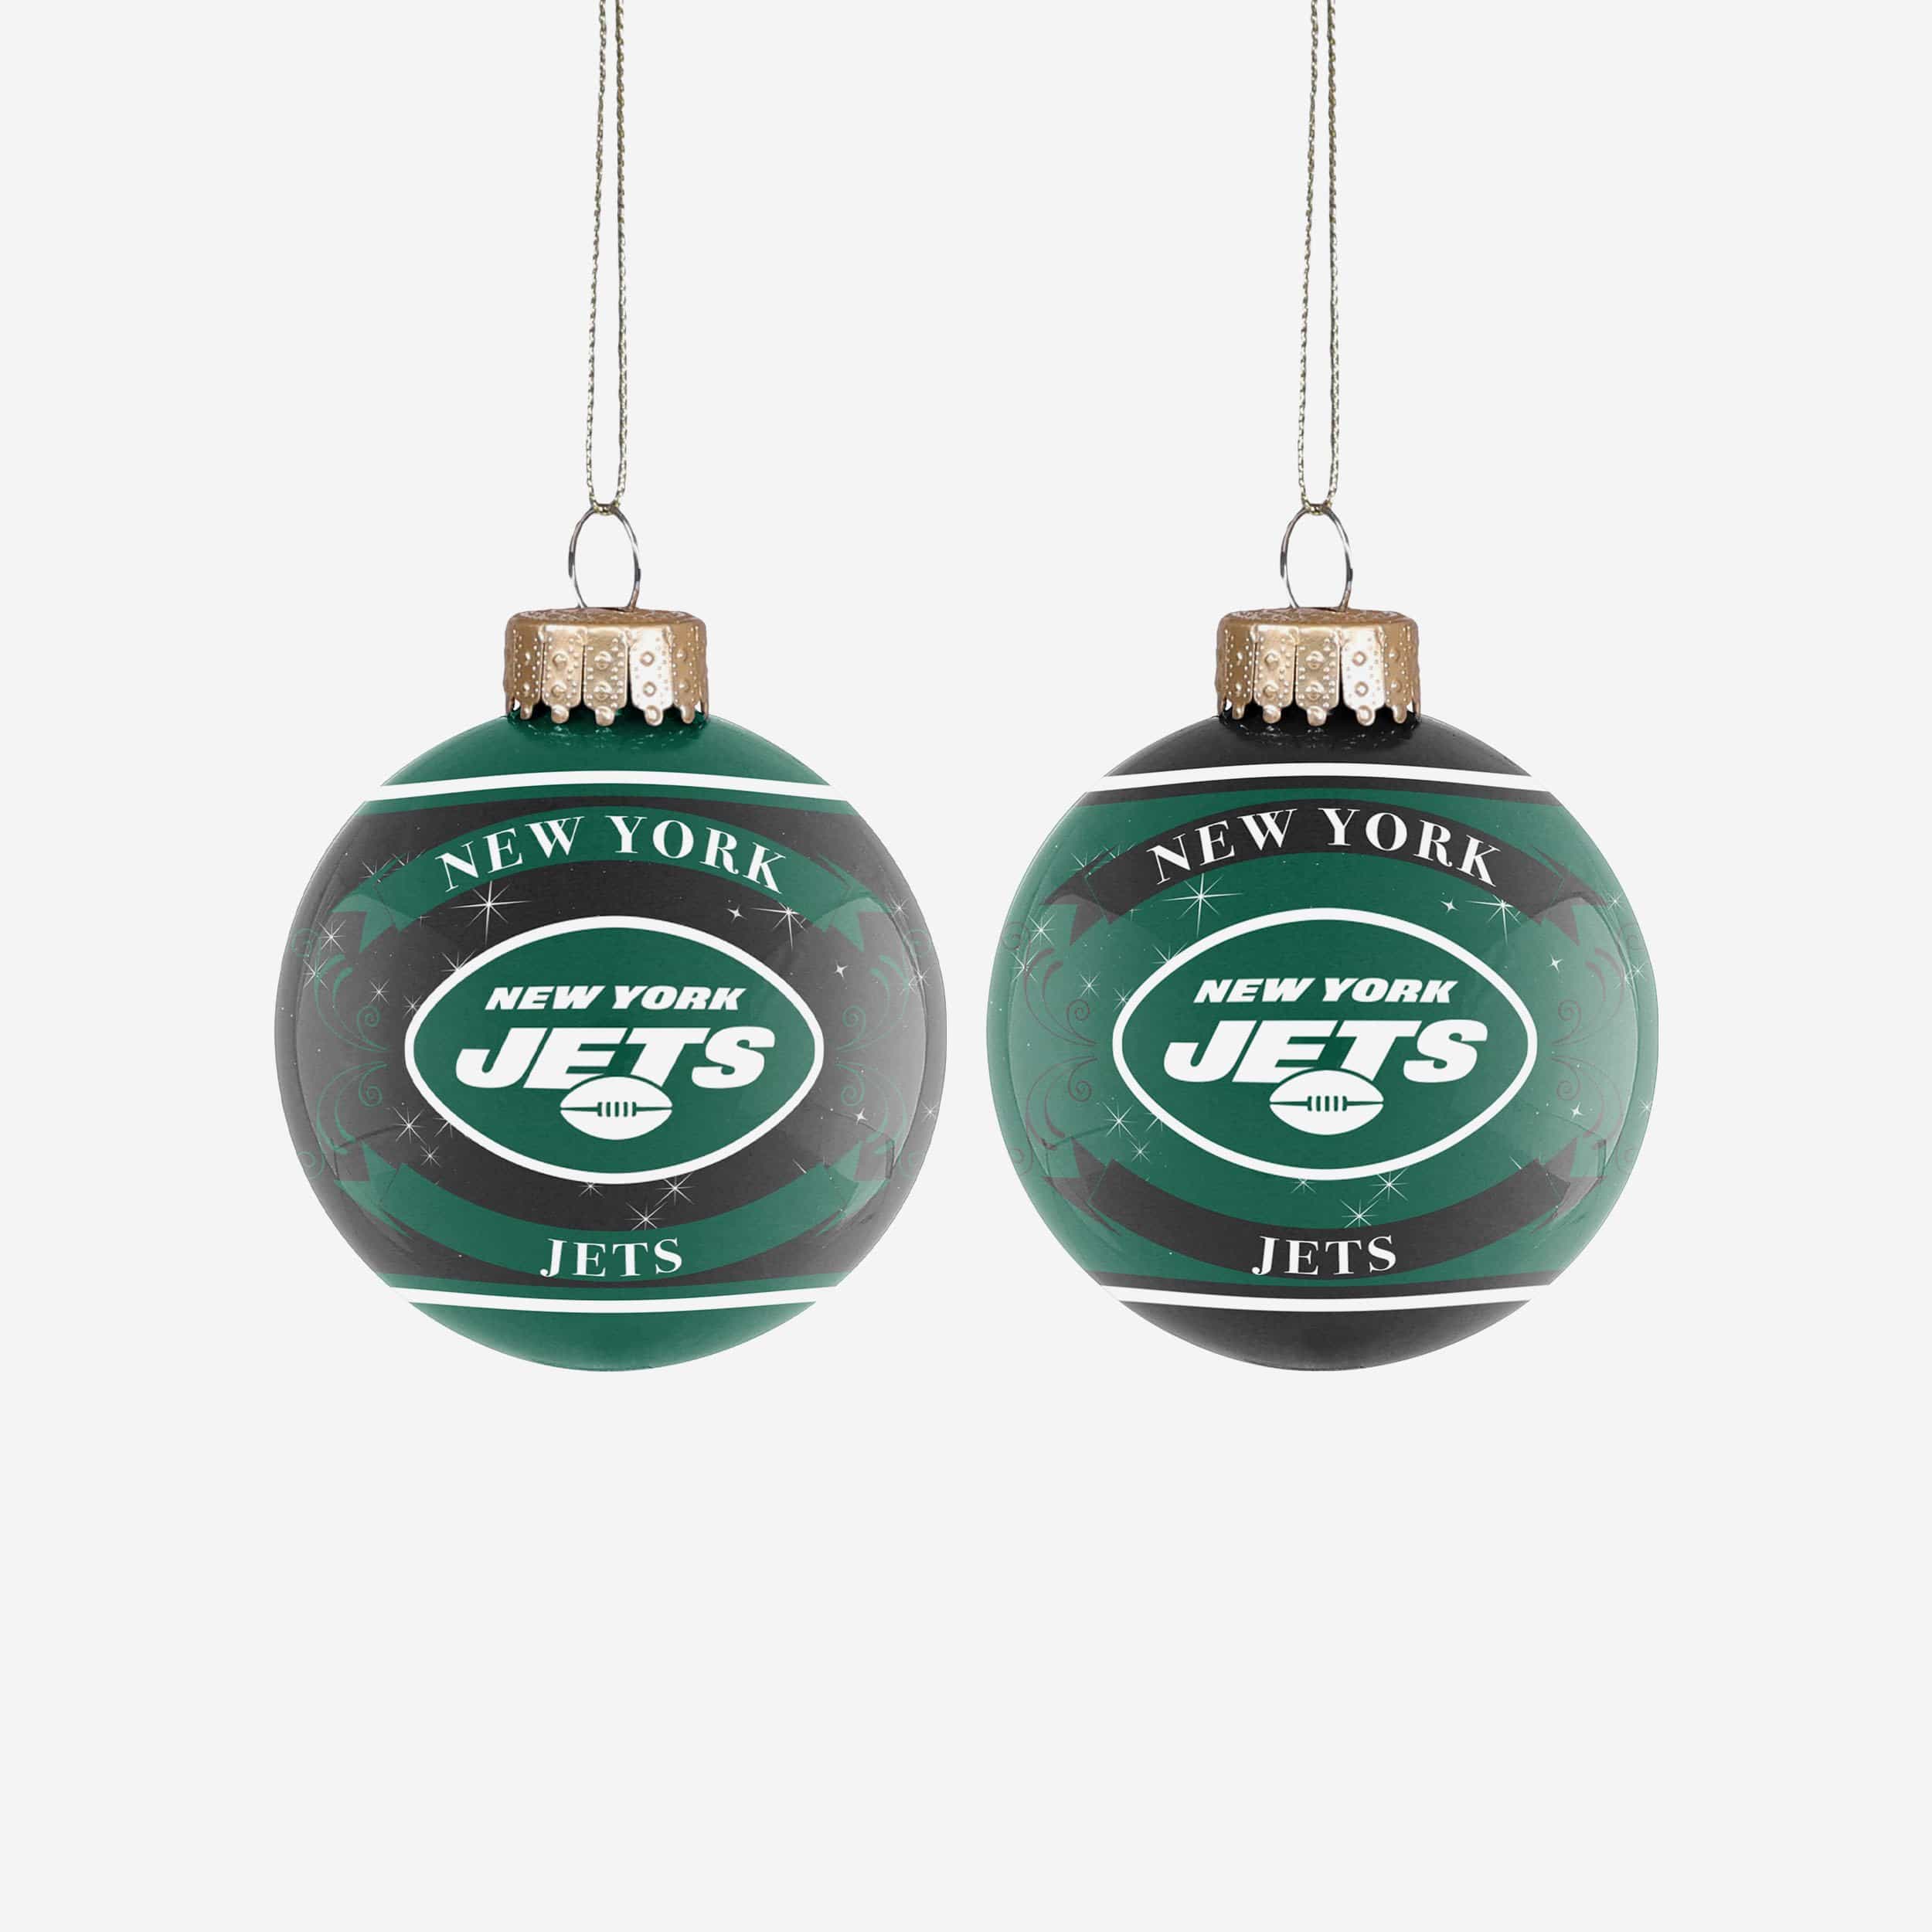 new york jets ornaments